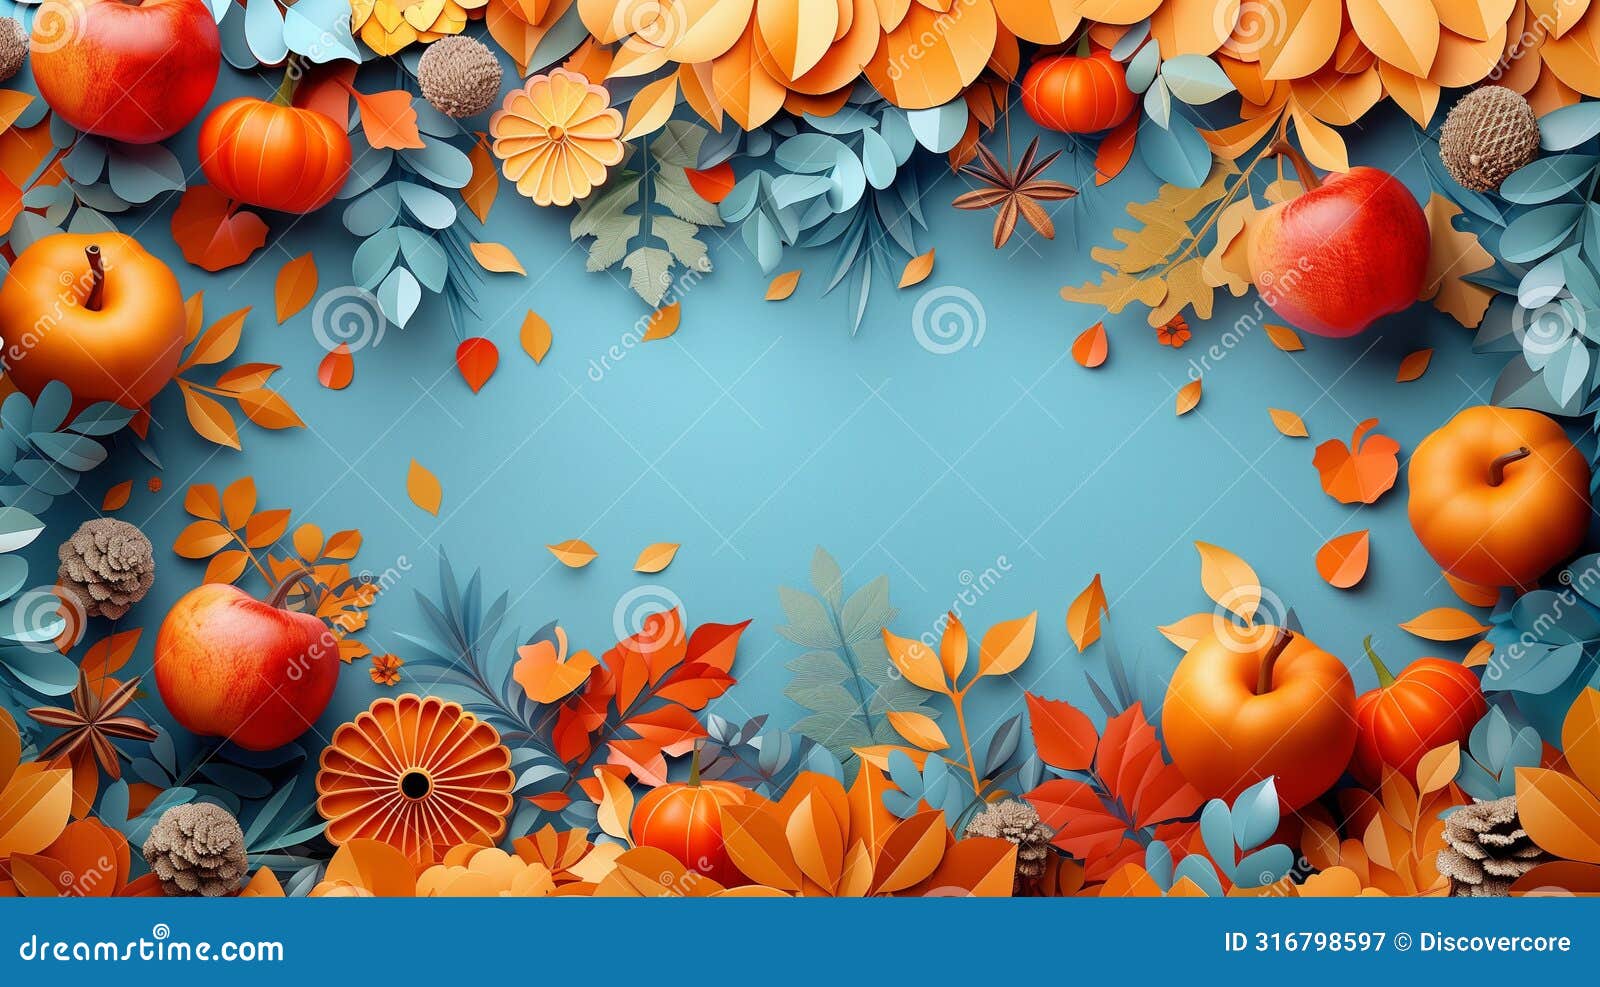 autumn abundance: colorful harvest and leaves 